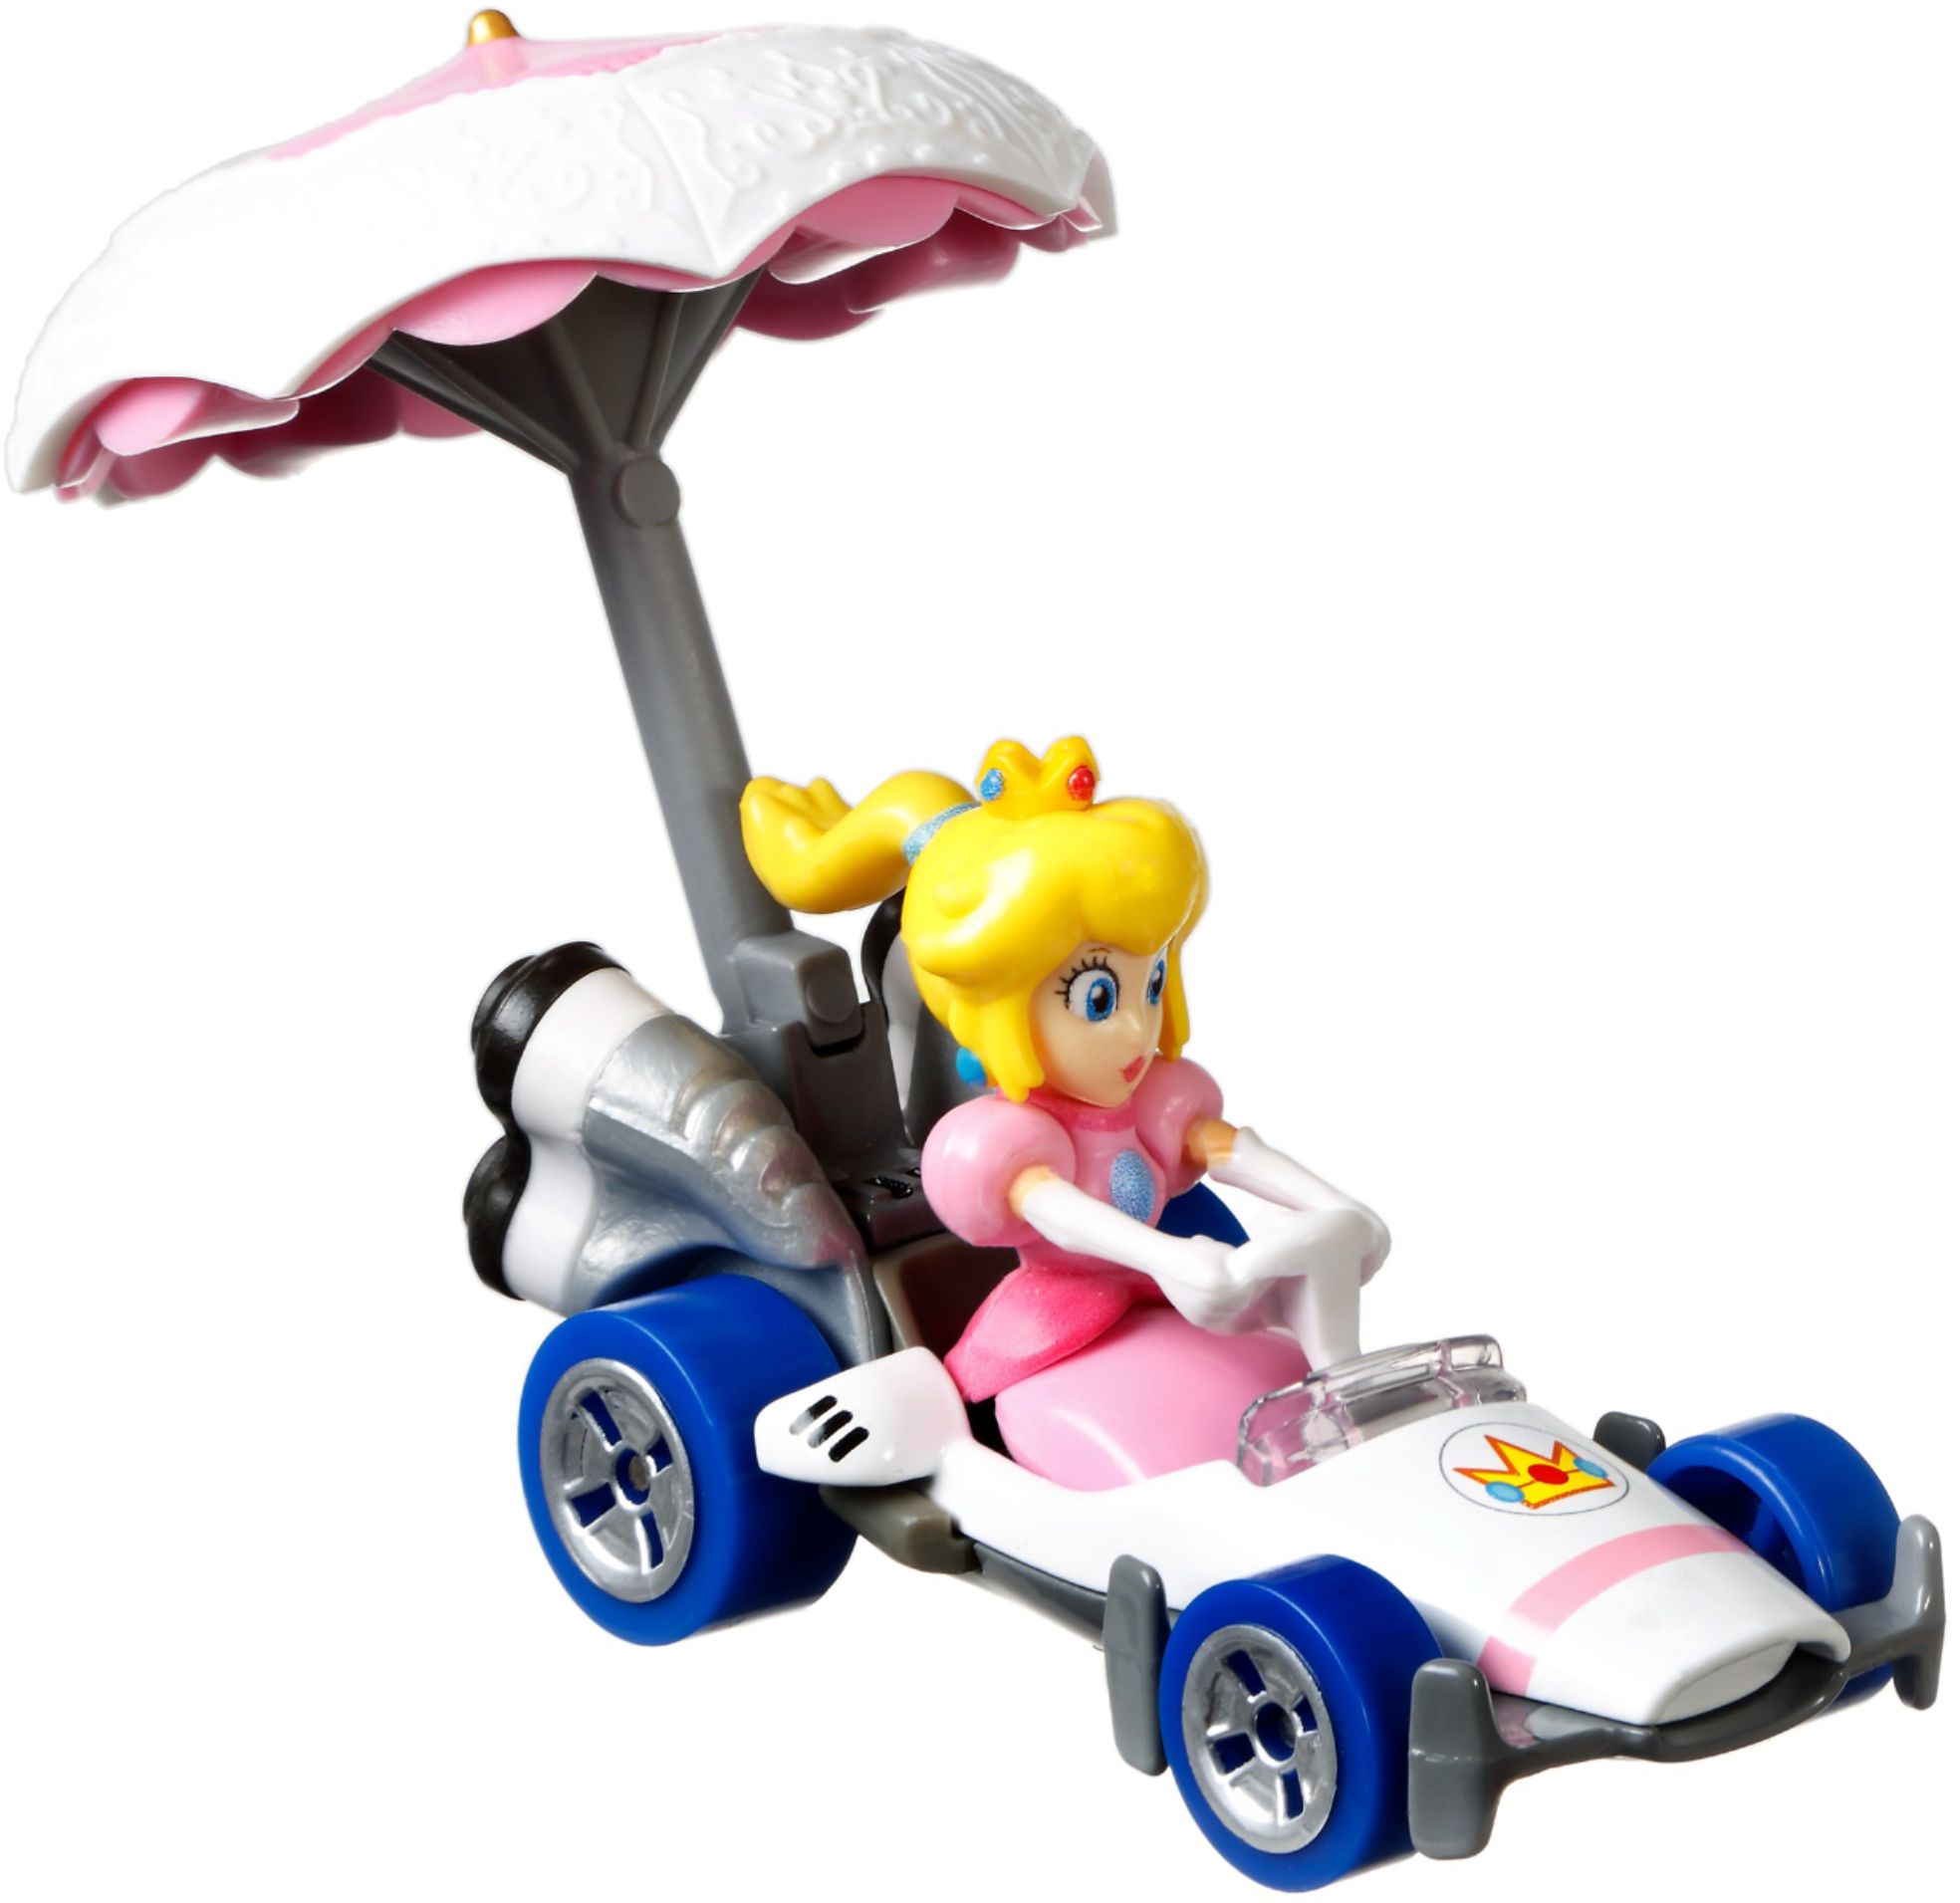 Mario Kart Hot Wheels Character Vehicle Styles May Vary GBG25 - Best Buy